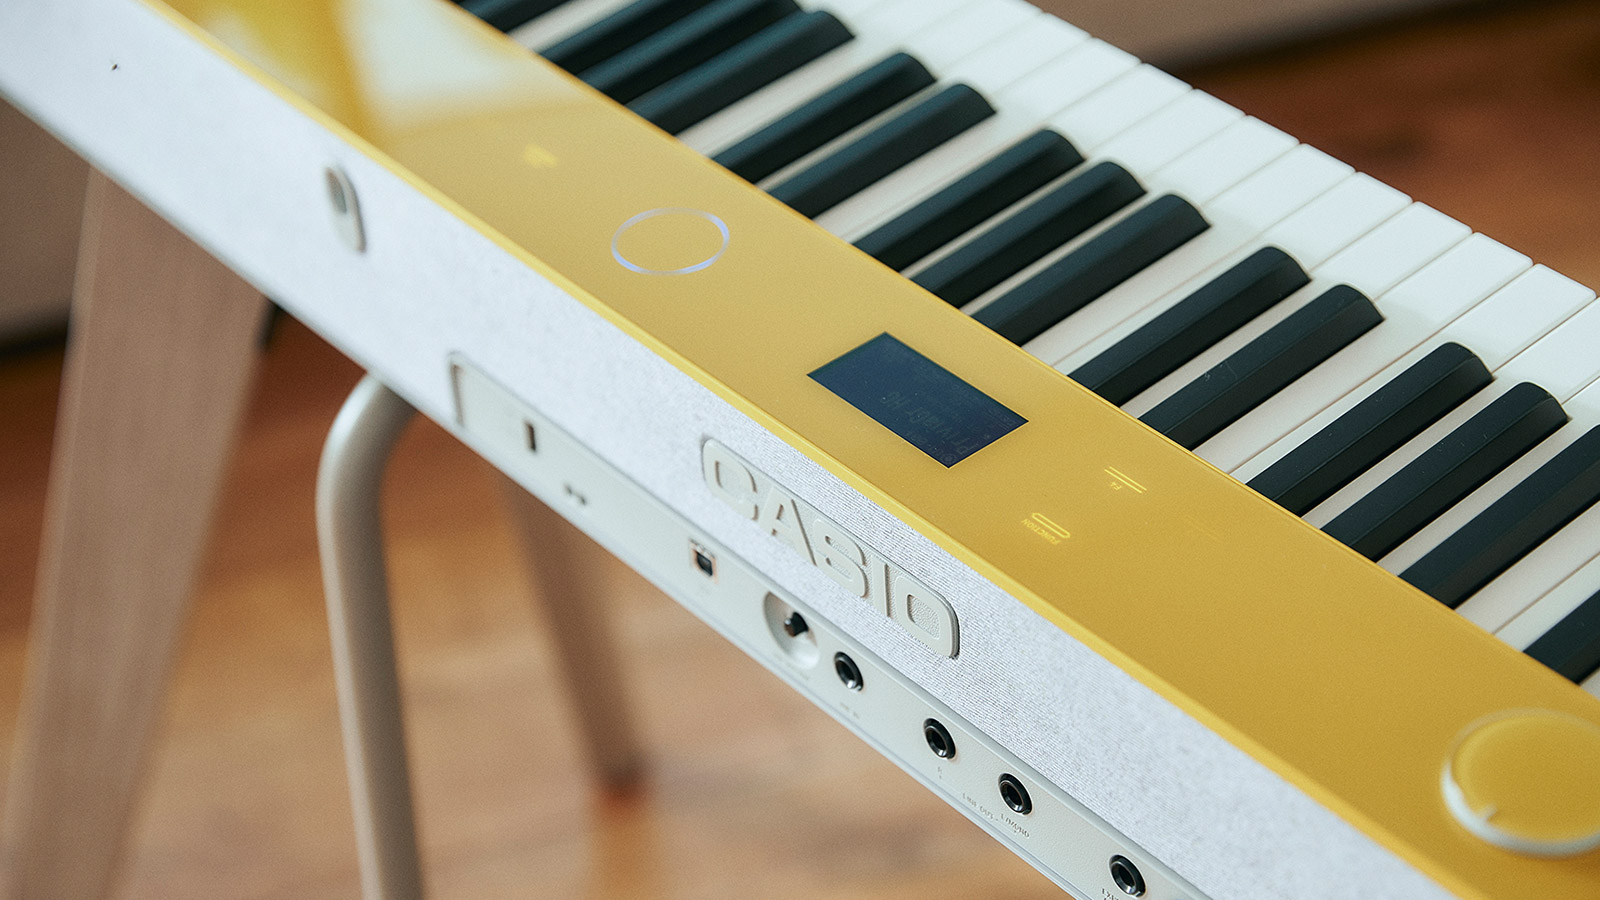 Casio PX-S7000HM Digital Piano